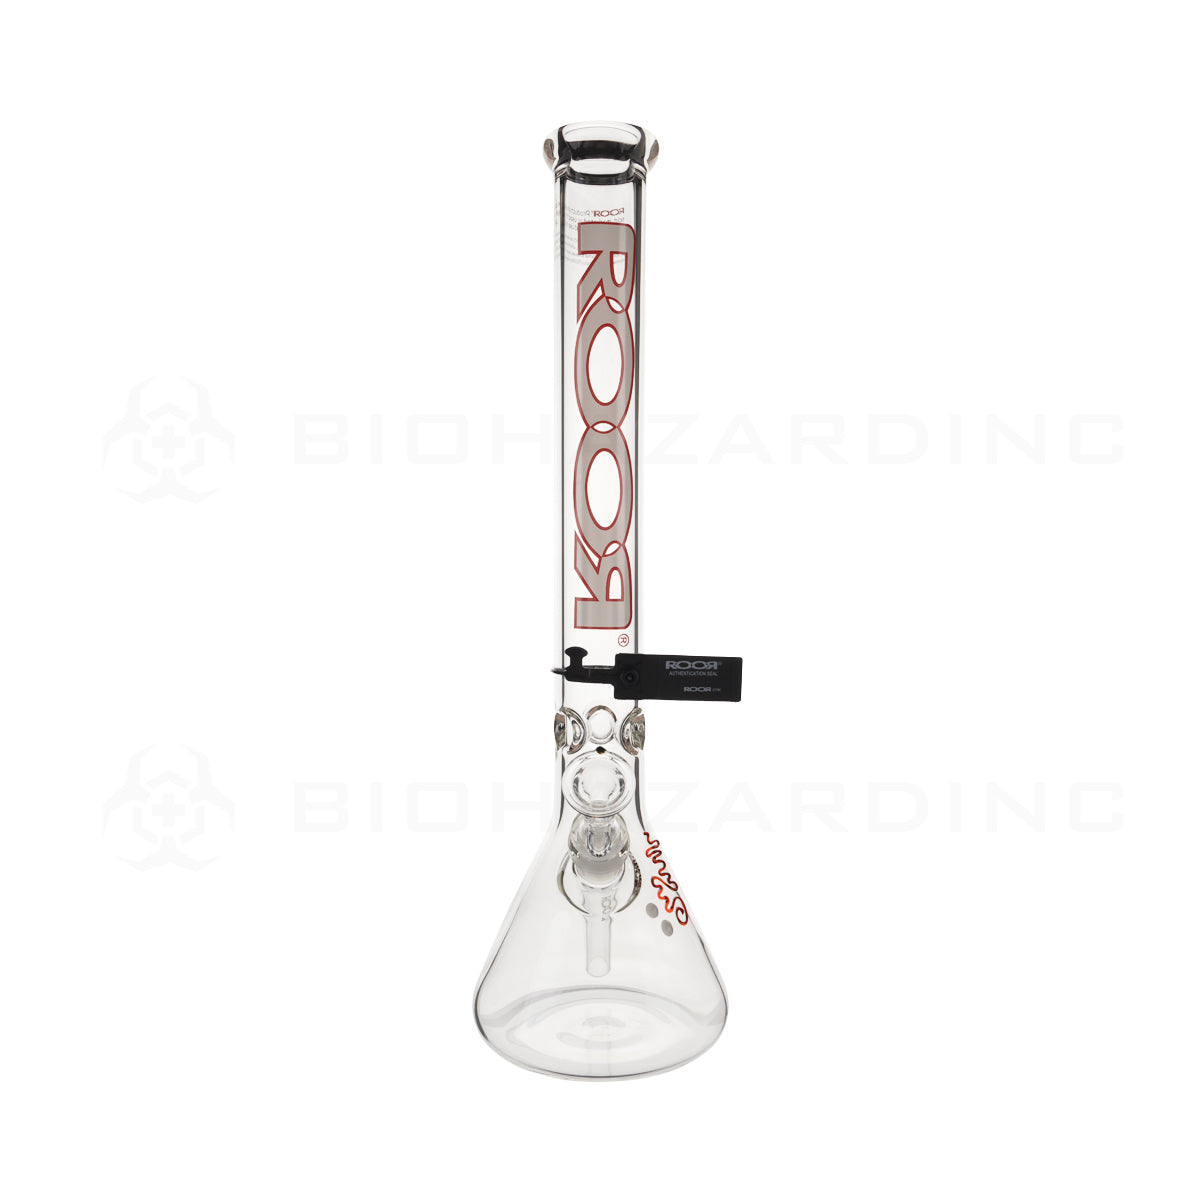 RooR® | Classic Beaker Water Pipe | 18" - 19mm - White & Red Logo Glass Bong Roor   